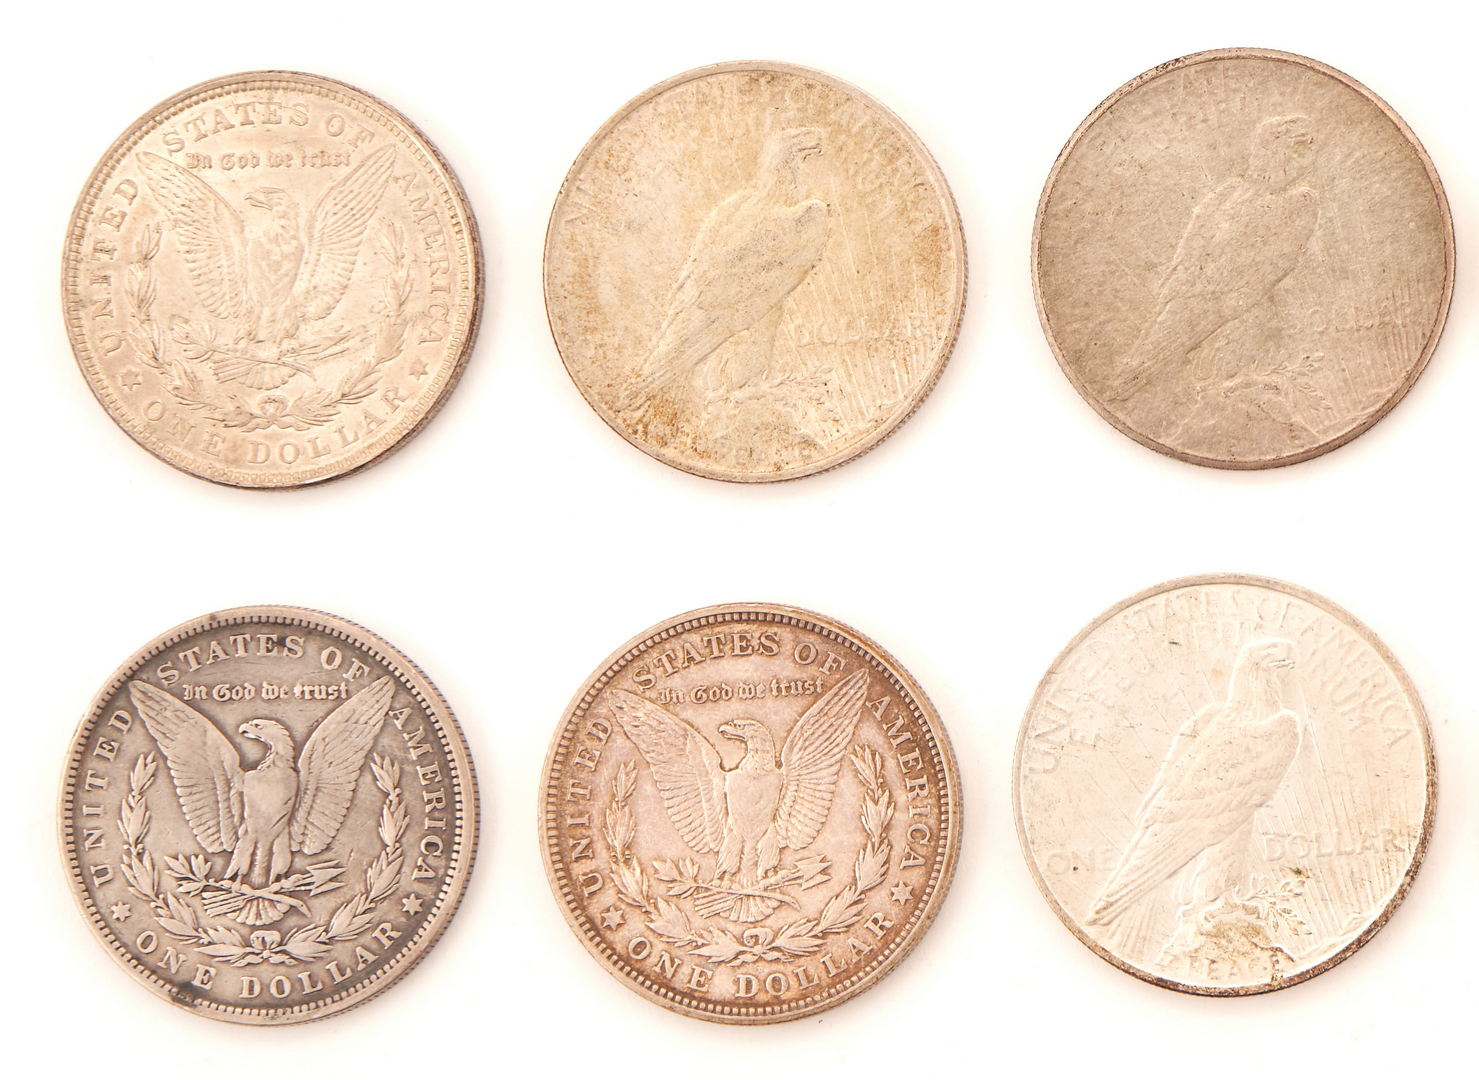 Lot 729: 14 US Mint Morgan & Peace Silver Dollars